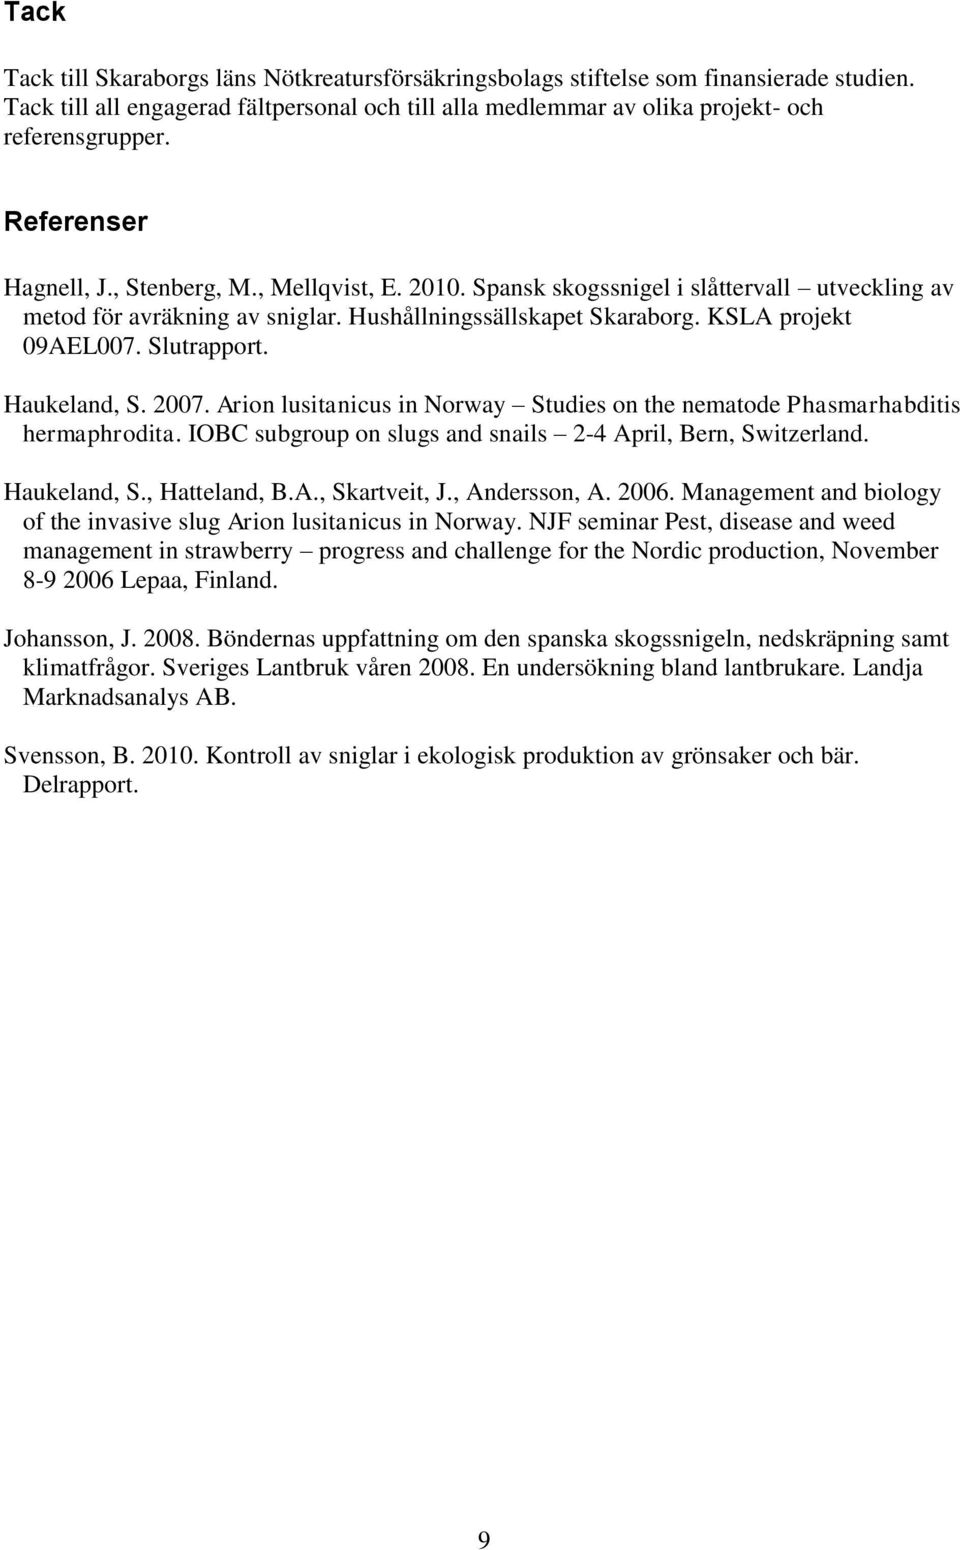 Slutrapport. Haukeland, S. 2007. Arion lusitanicus in Norway Studies on the nematode Phasmarhabditis hermaphrodita. IOBC subgroup on slugs and snails 2-4 April, Bern, Switzerland. Haukeland, S., Hatteland, B.